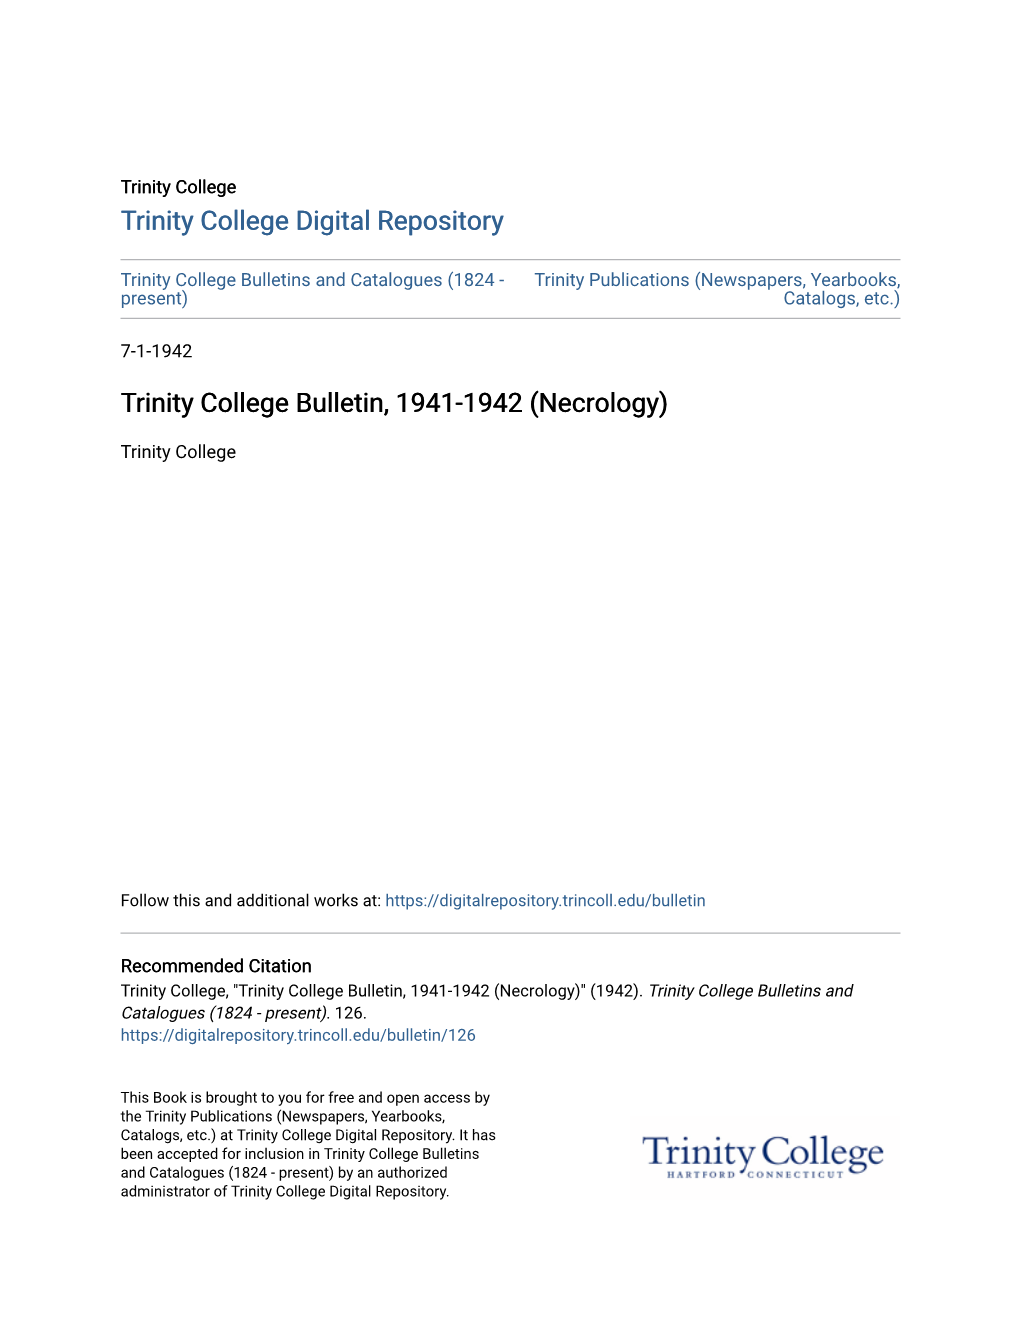 Trinity College Bulletin, 1941-1942 (Necrology)